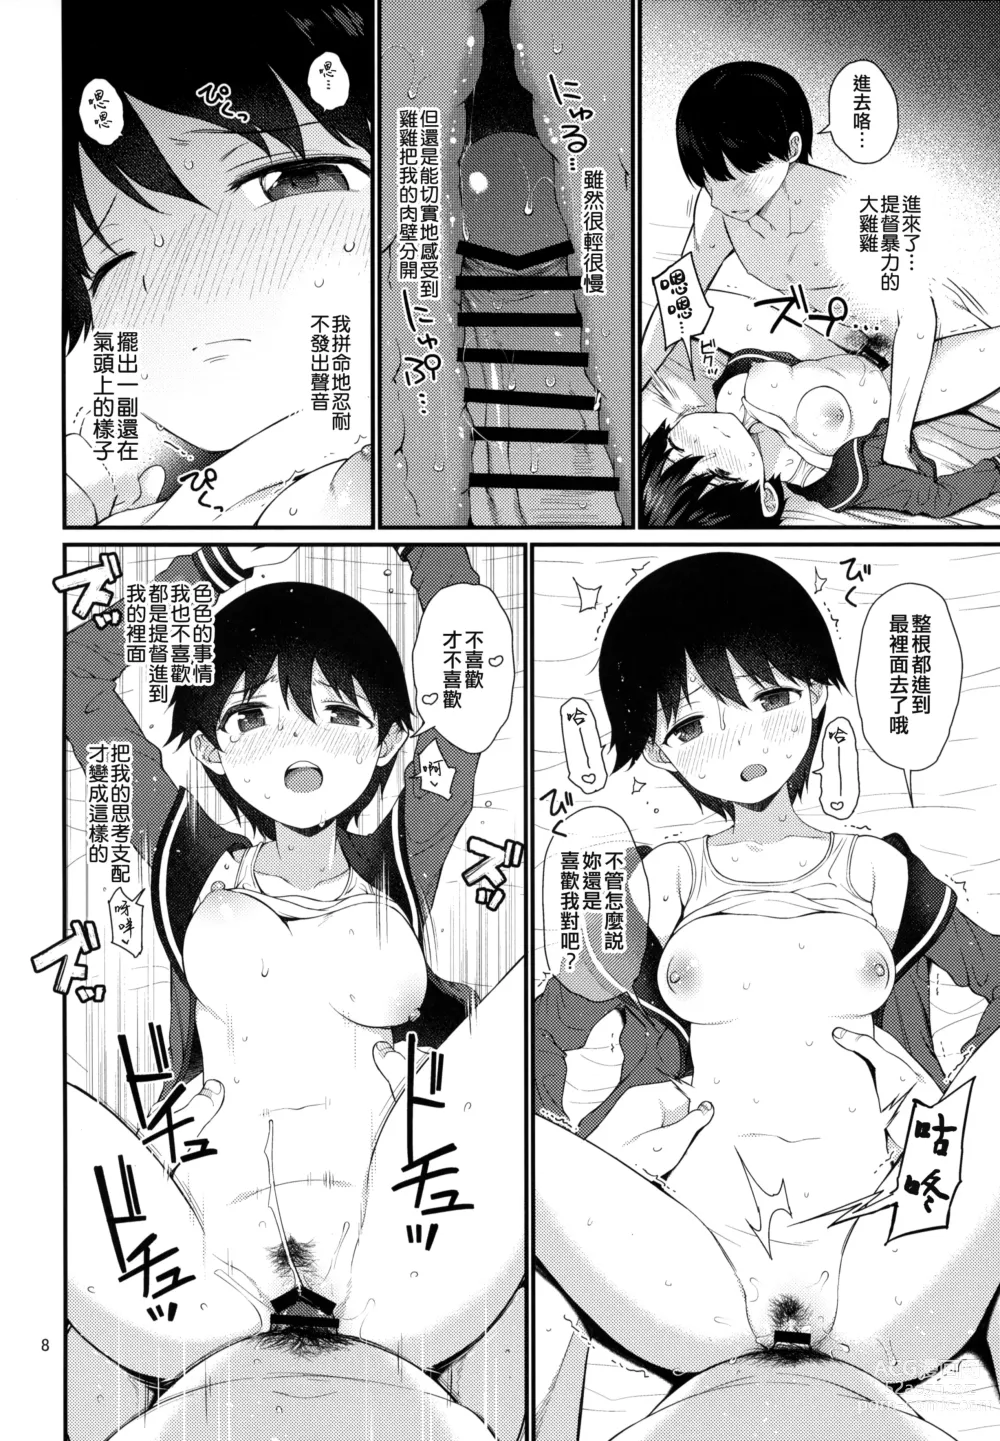 Page 8 of doujinshi Mogami to Ichaicha Kenkax!!